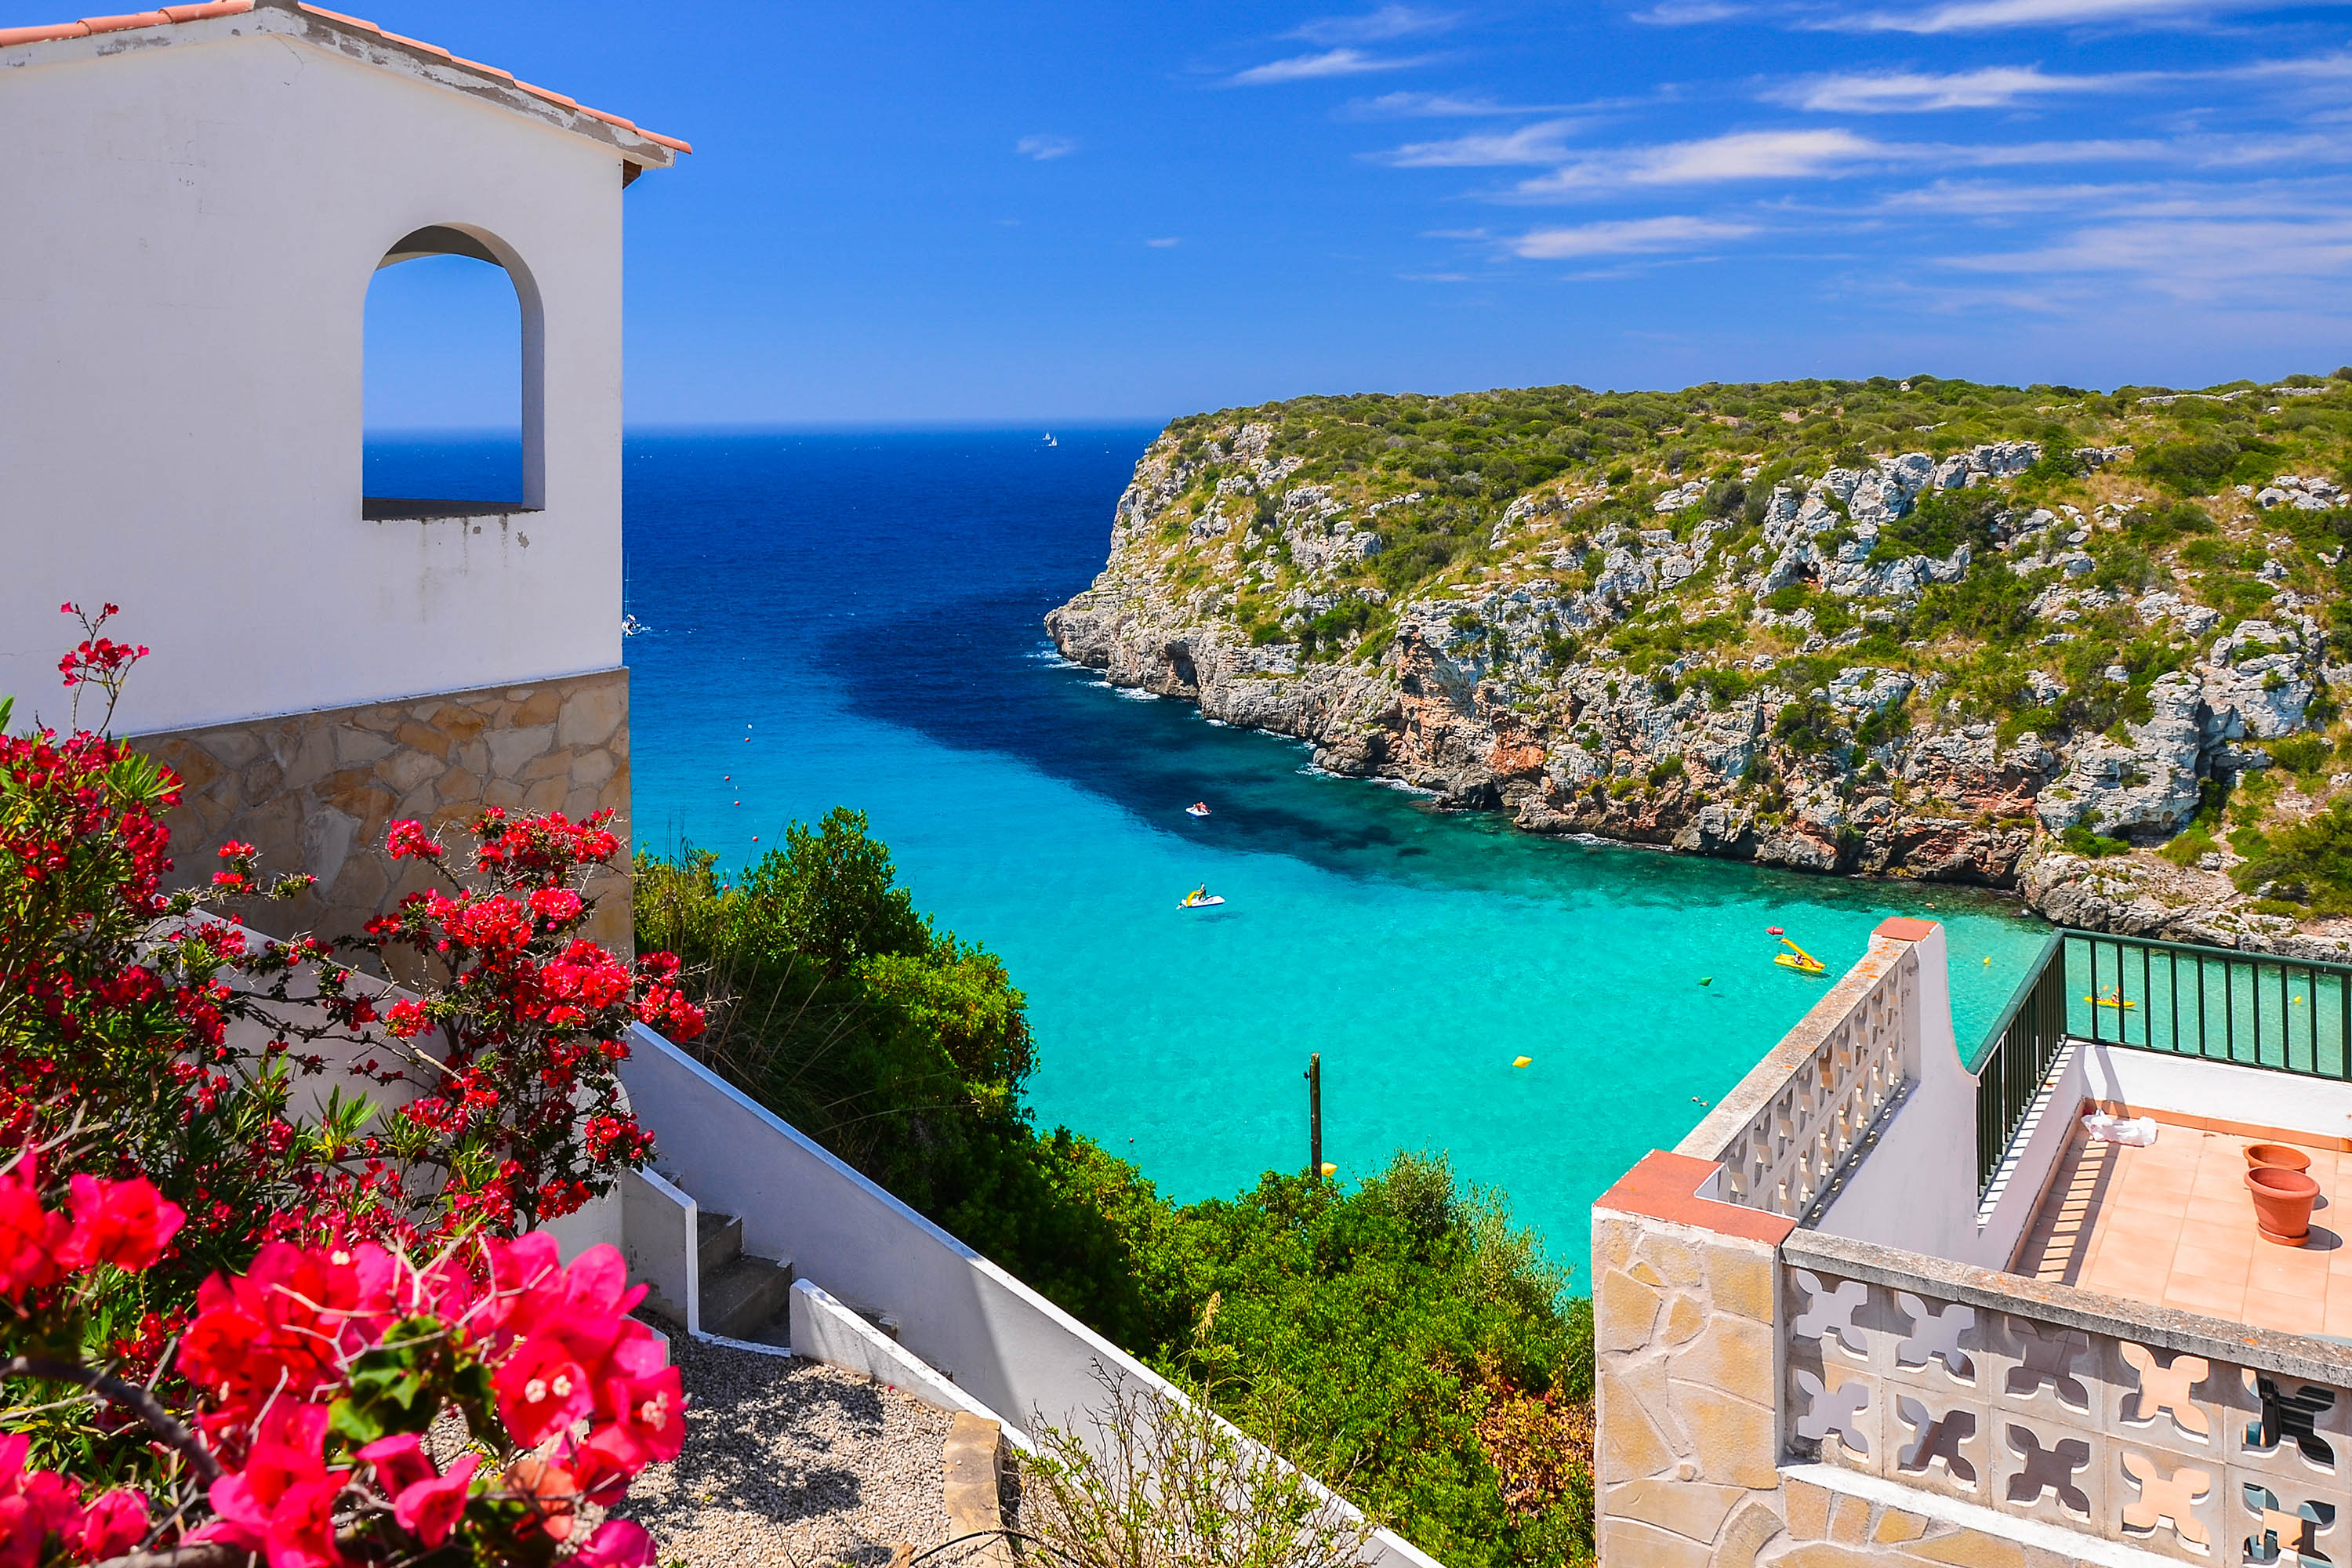 Holiday villa overlooking Cala Porter Menorca island Spain shutterstock_567838465 2